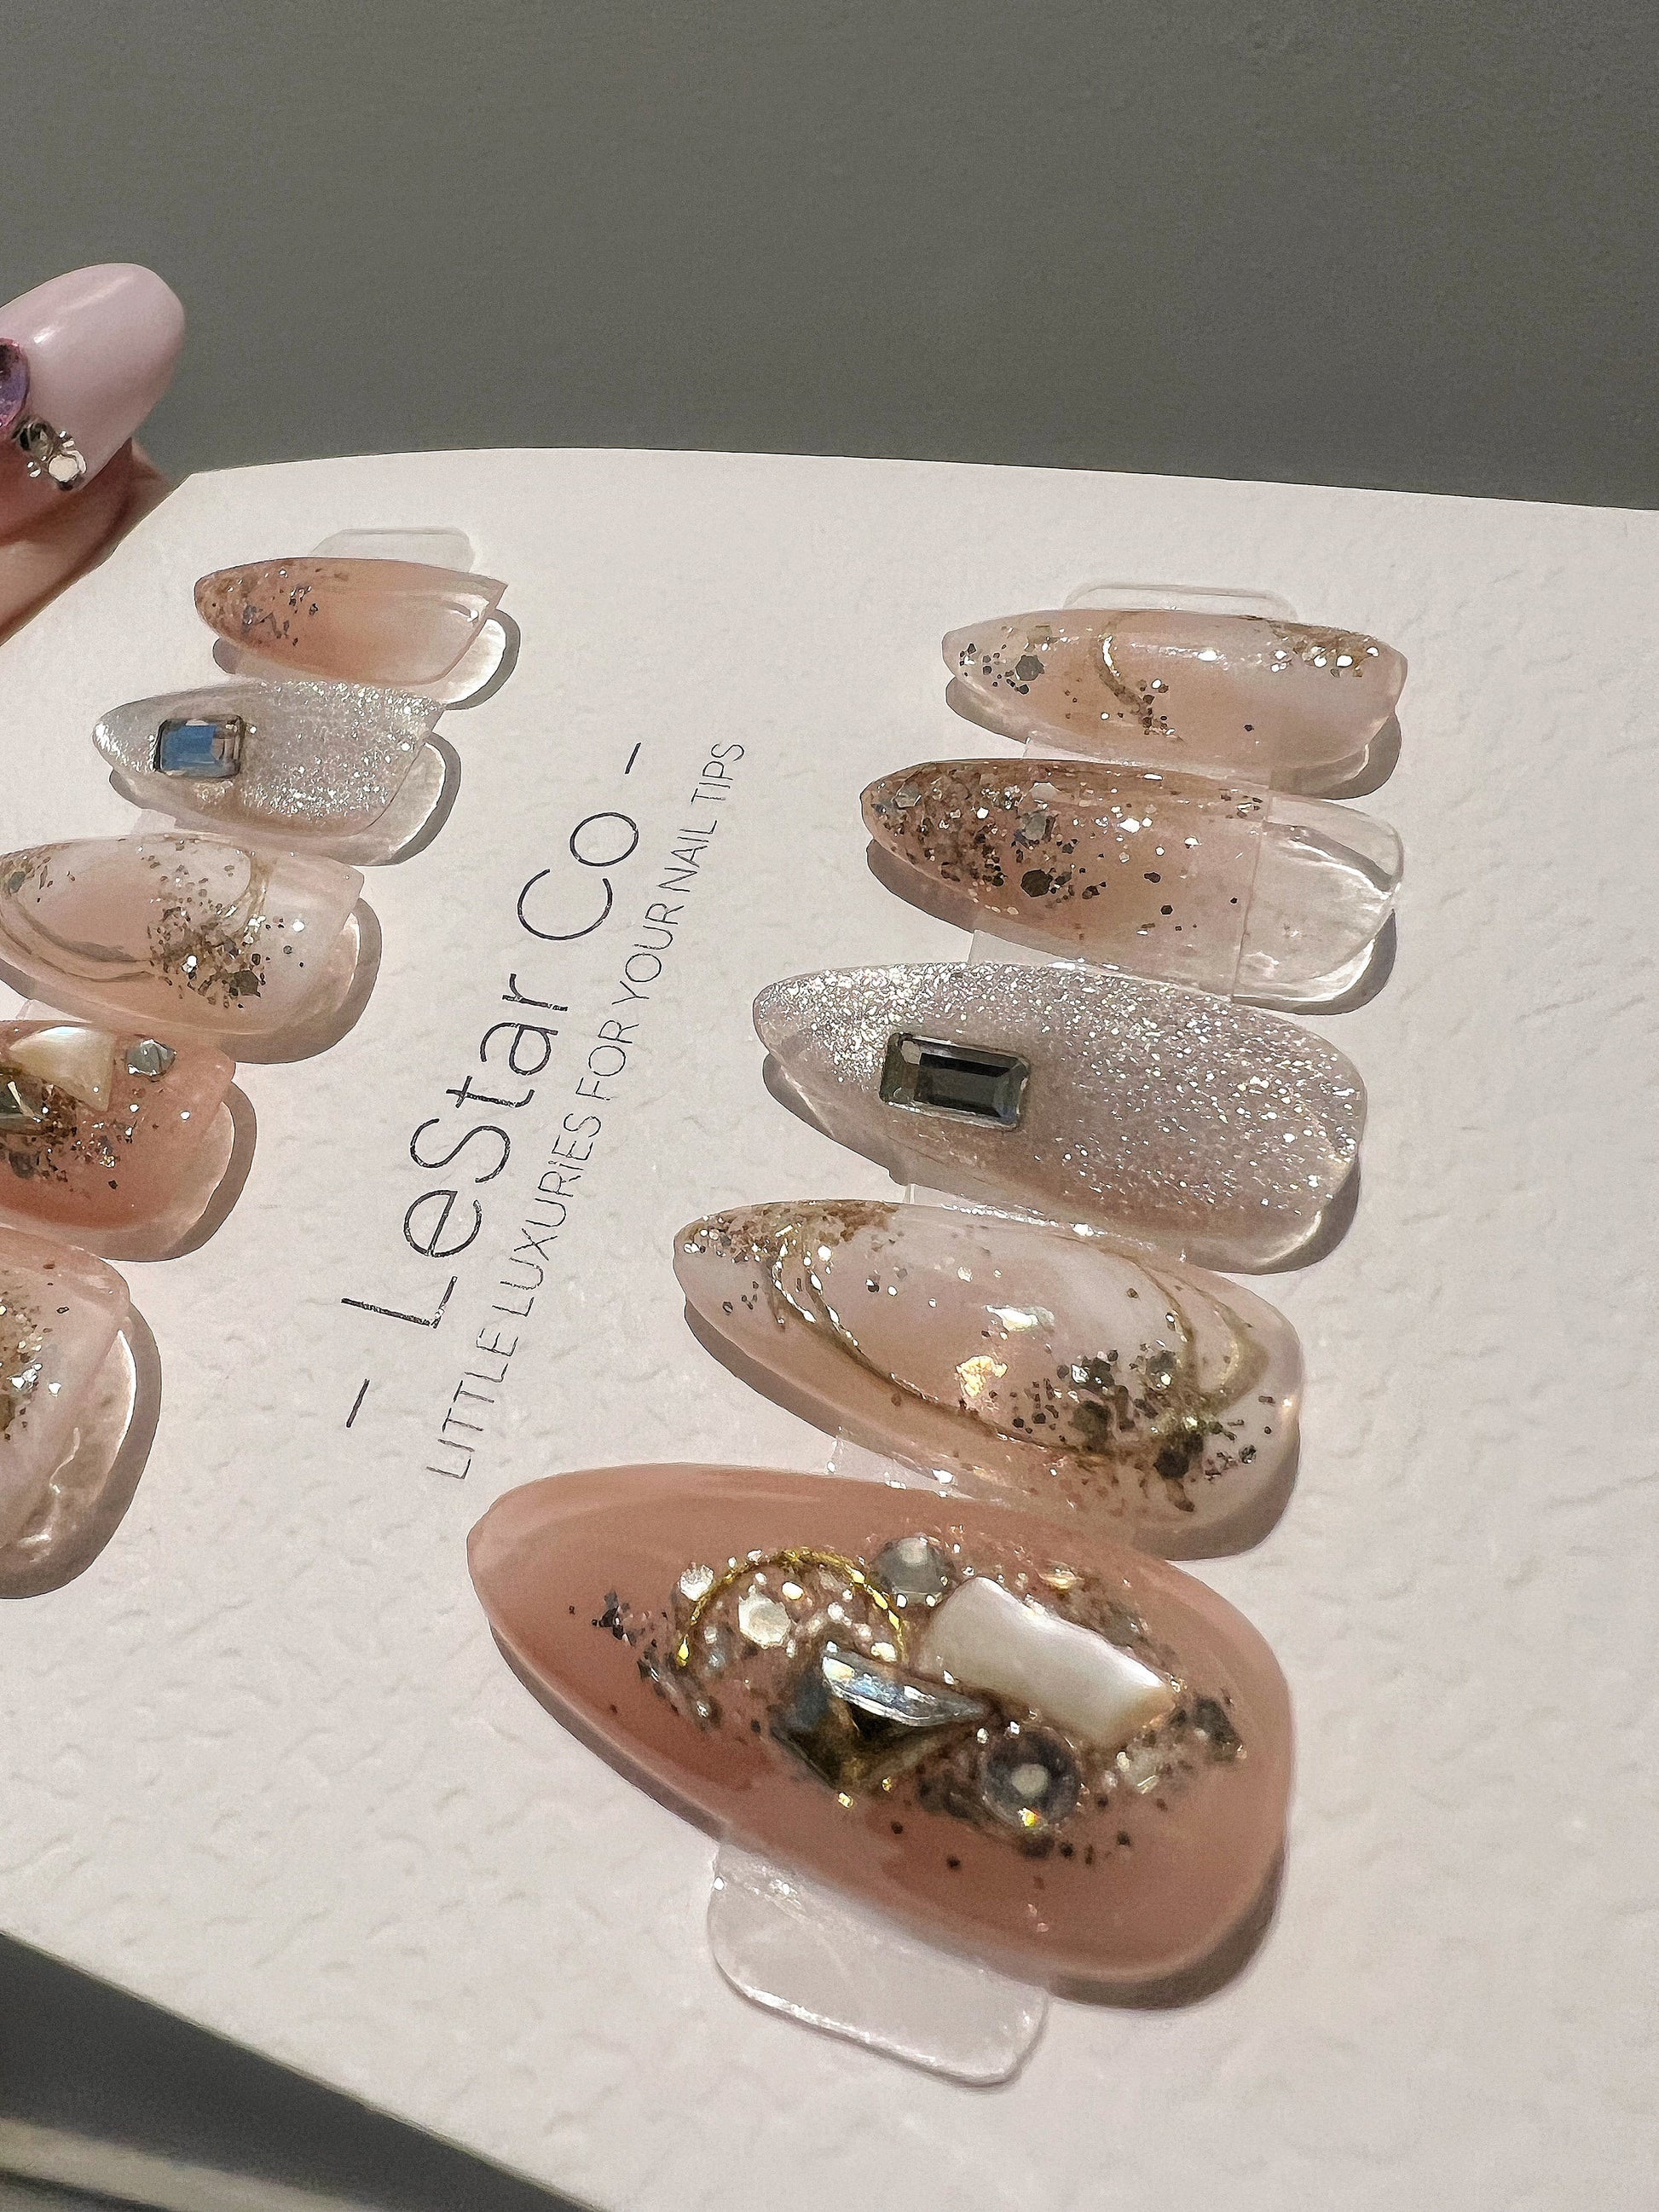 Reusable Gemstone Romance | Premium Press on Nails Gel | Fake Nails | Cute Fun Colorful Gel Nail Artist faux nails BB257